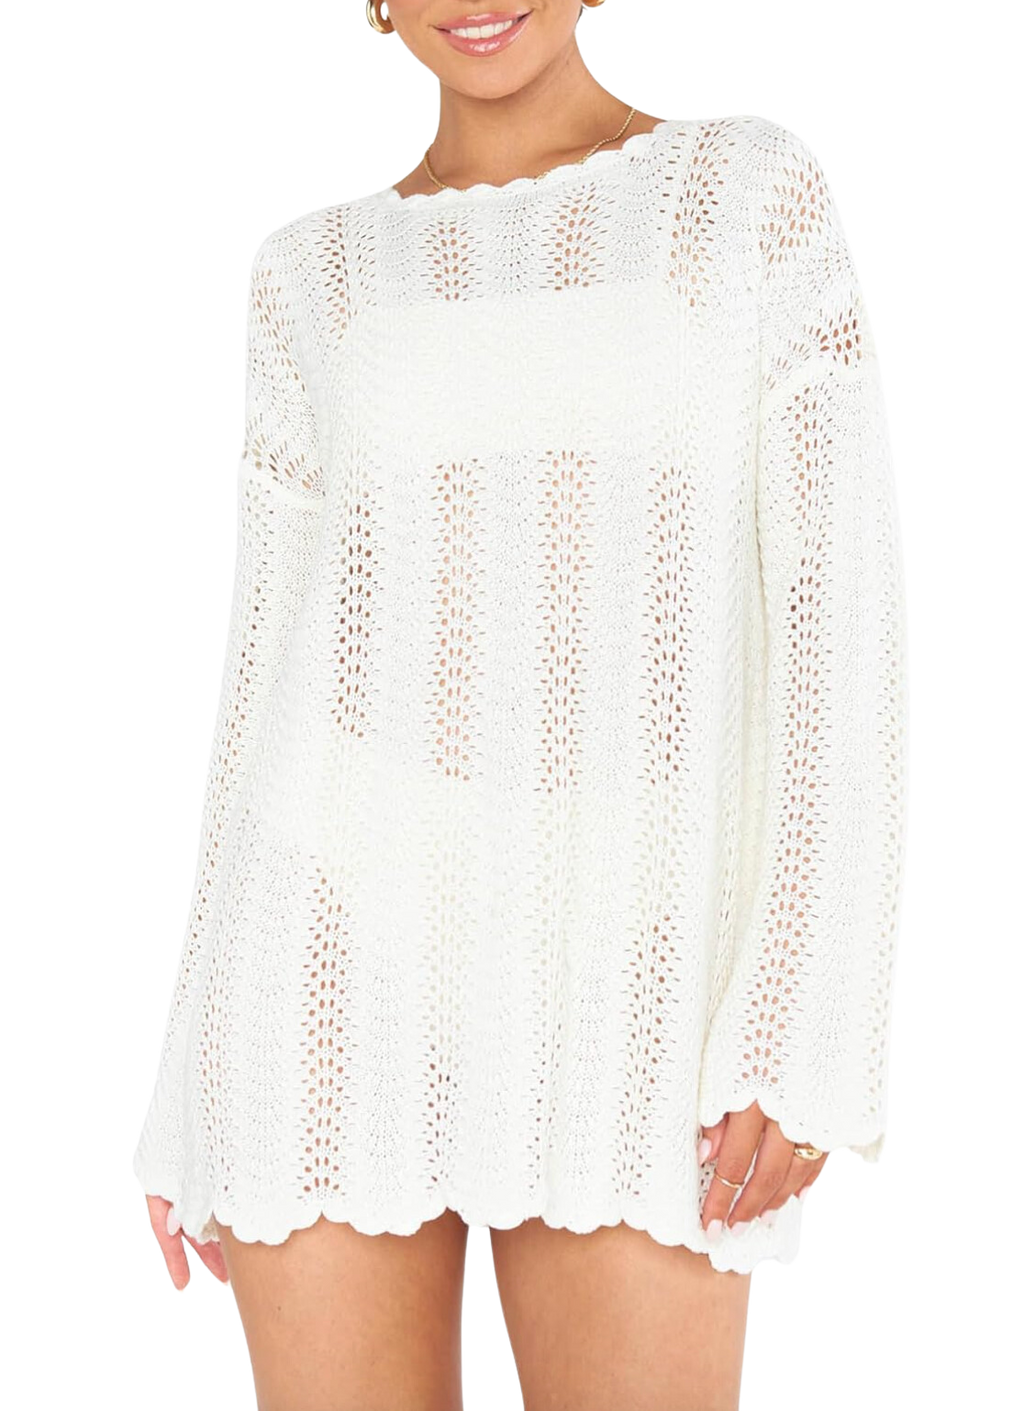 Packable pullover - white crochet